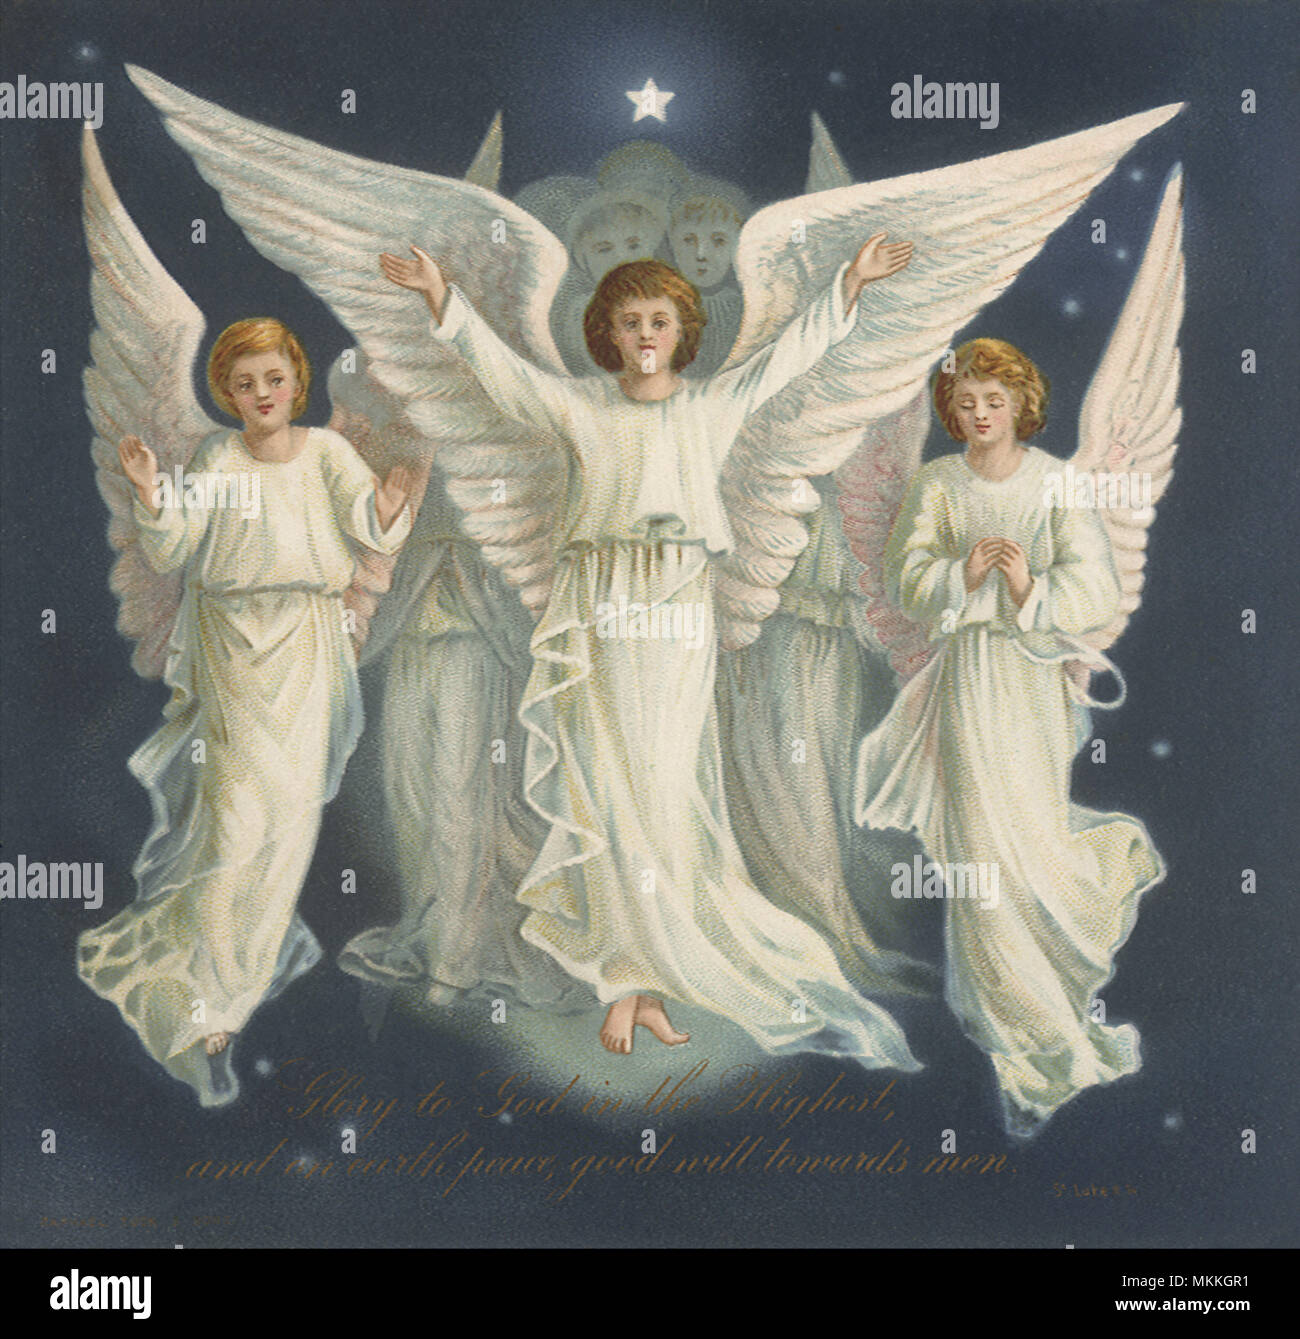 Three angels. Три ангела. 3 Ангела хранителя. Три ангелочка. Ангелы поют.